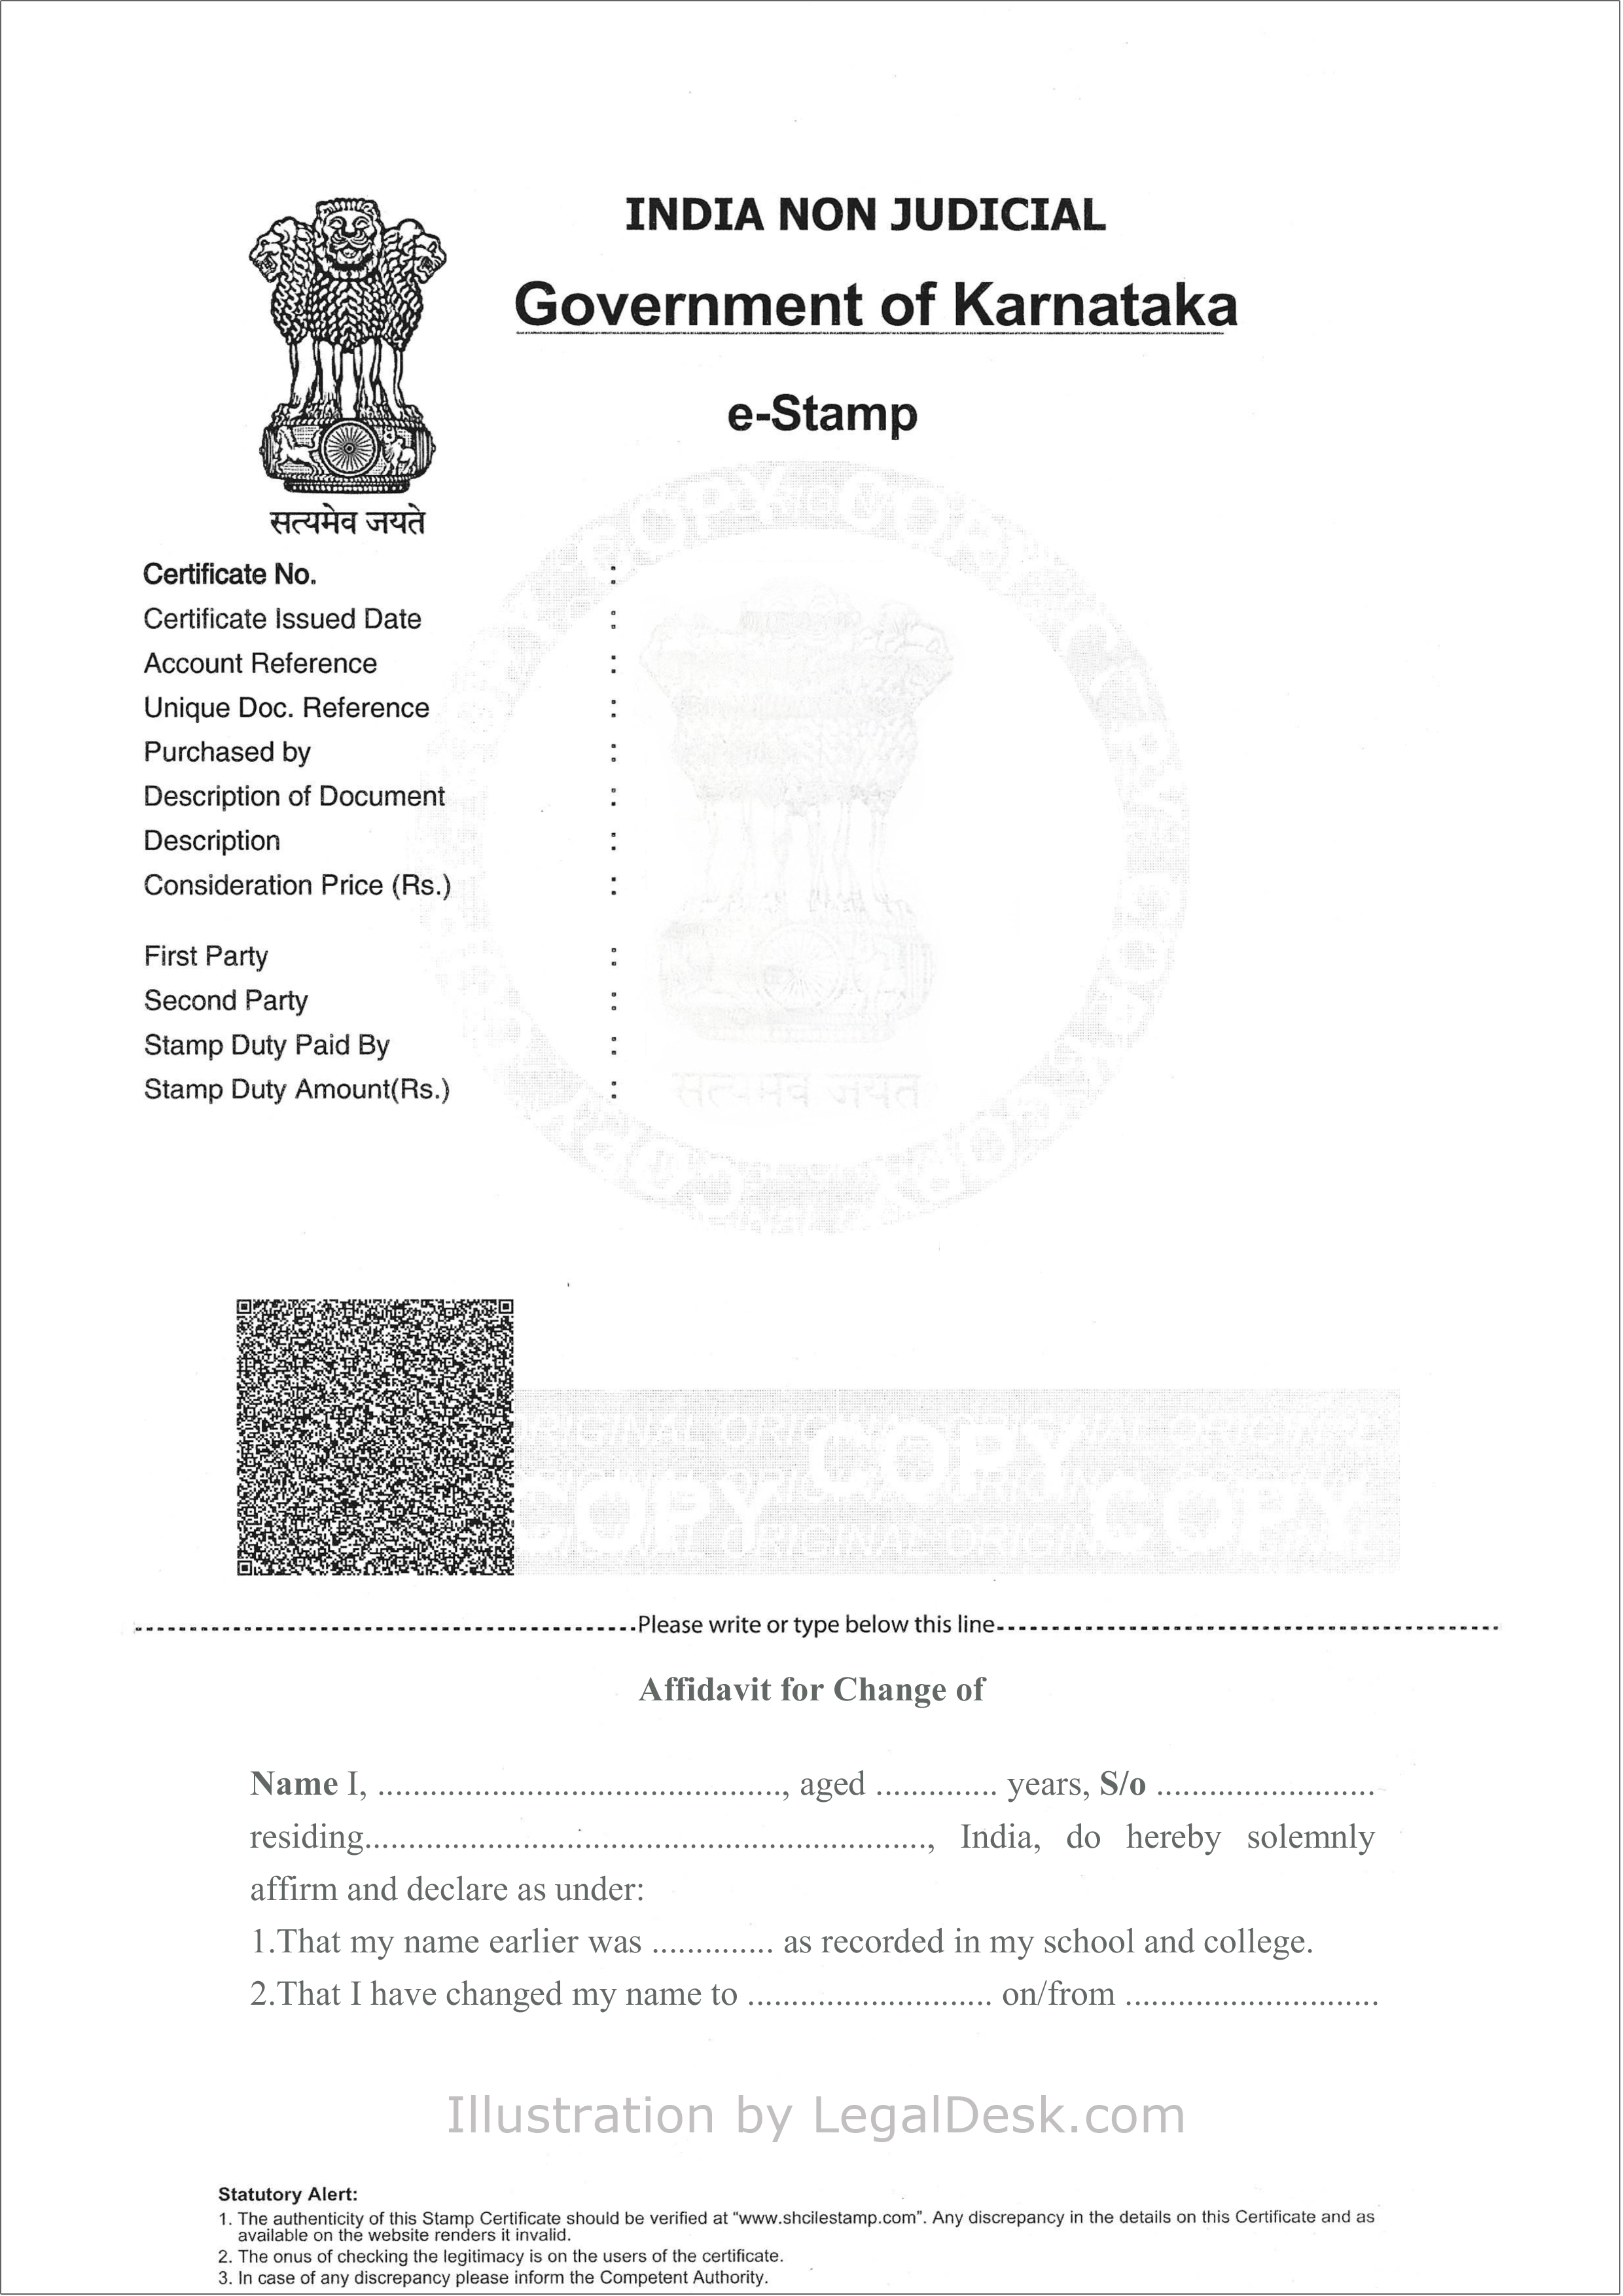 Name change affidavit e-stamp paper